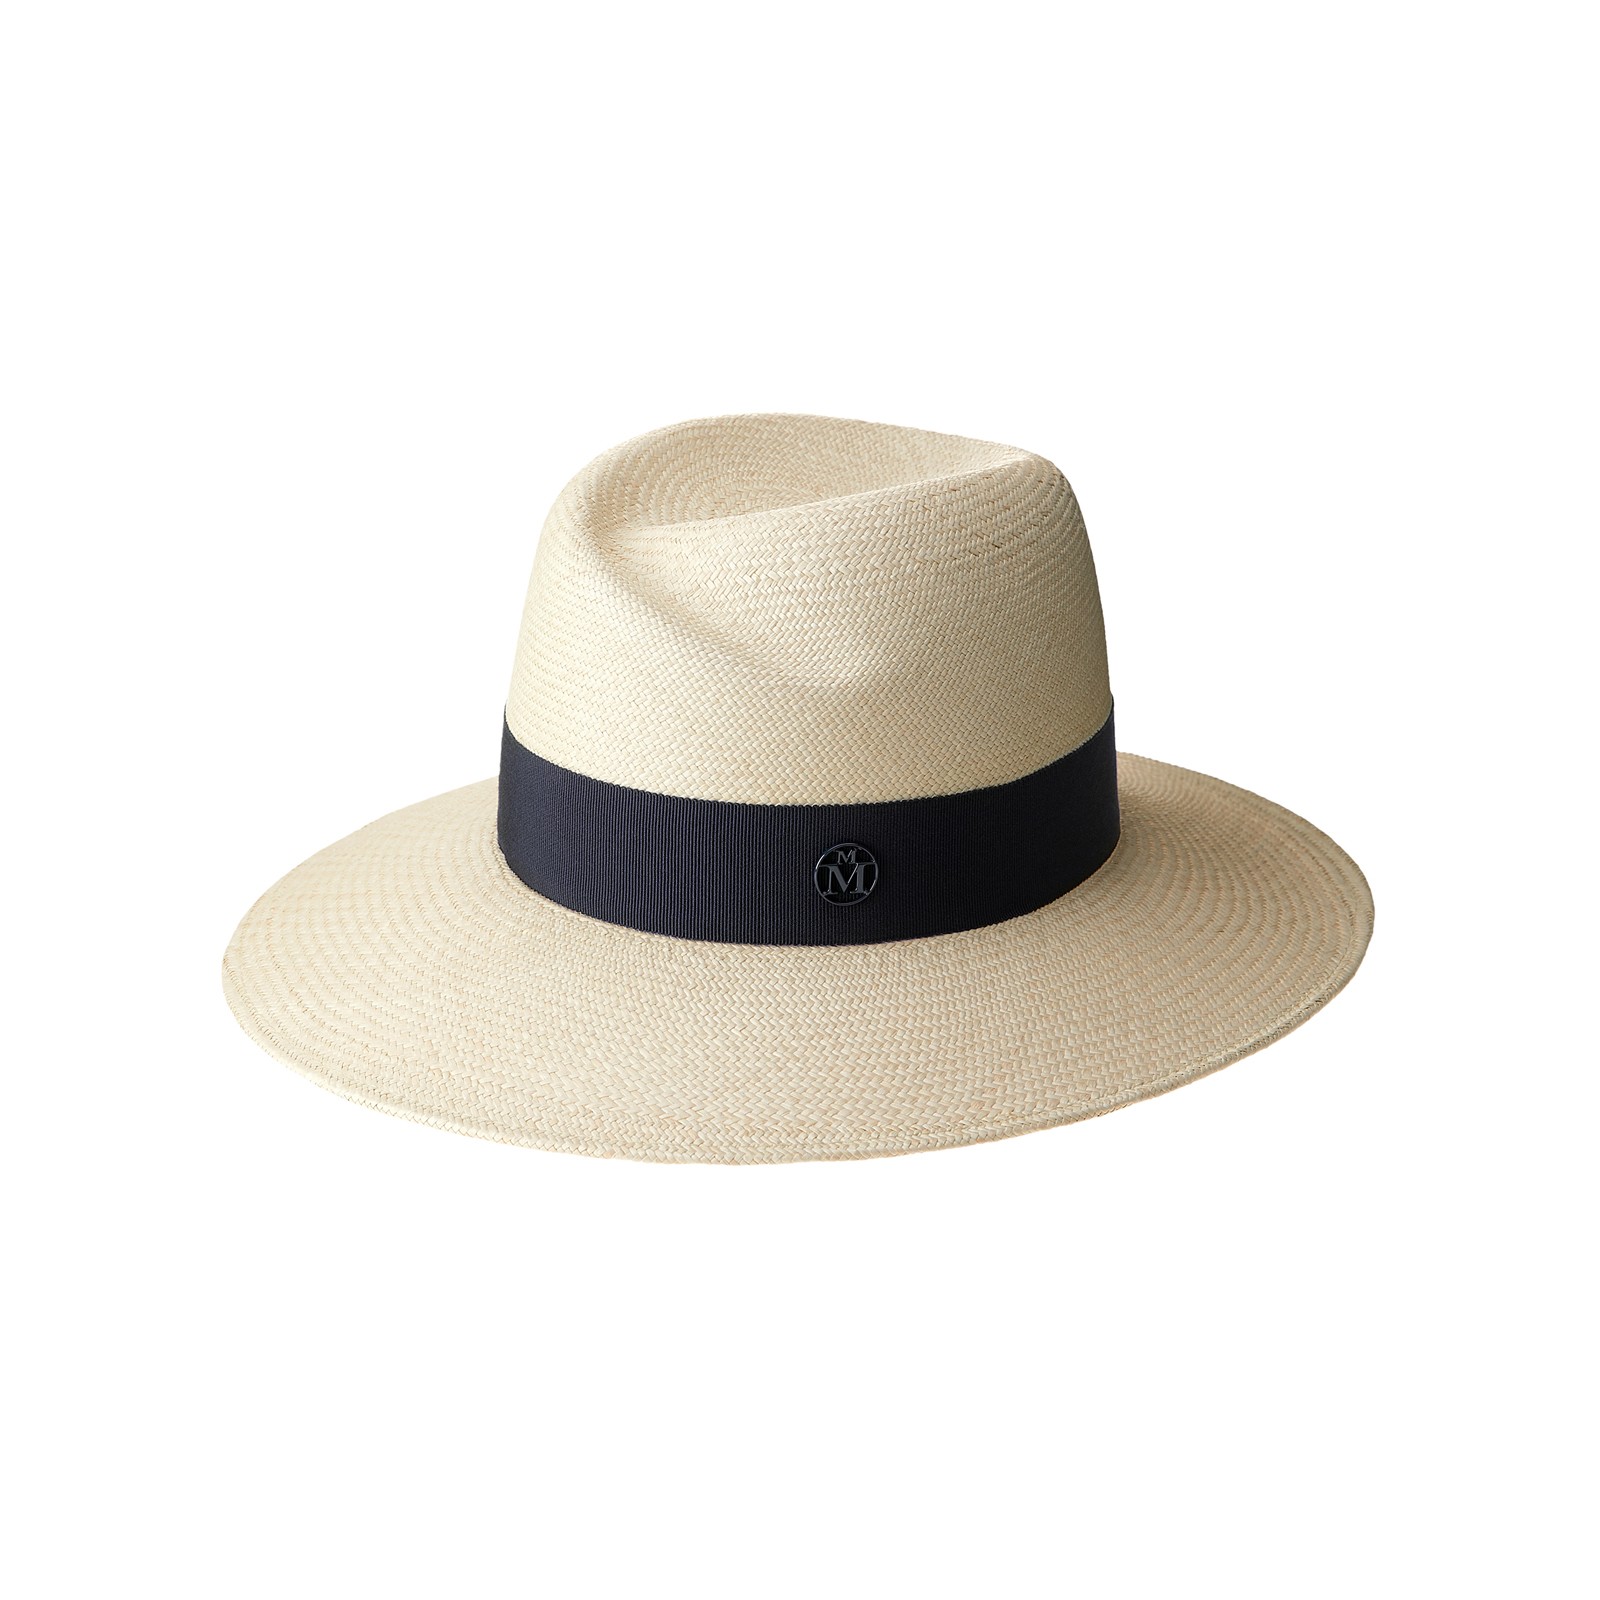 Panama straw fedora hat with navy grosgrain ribbon